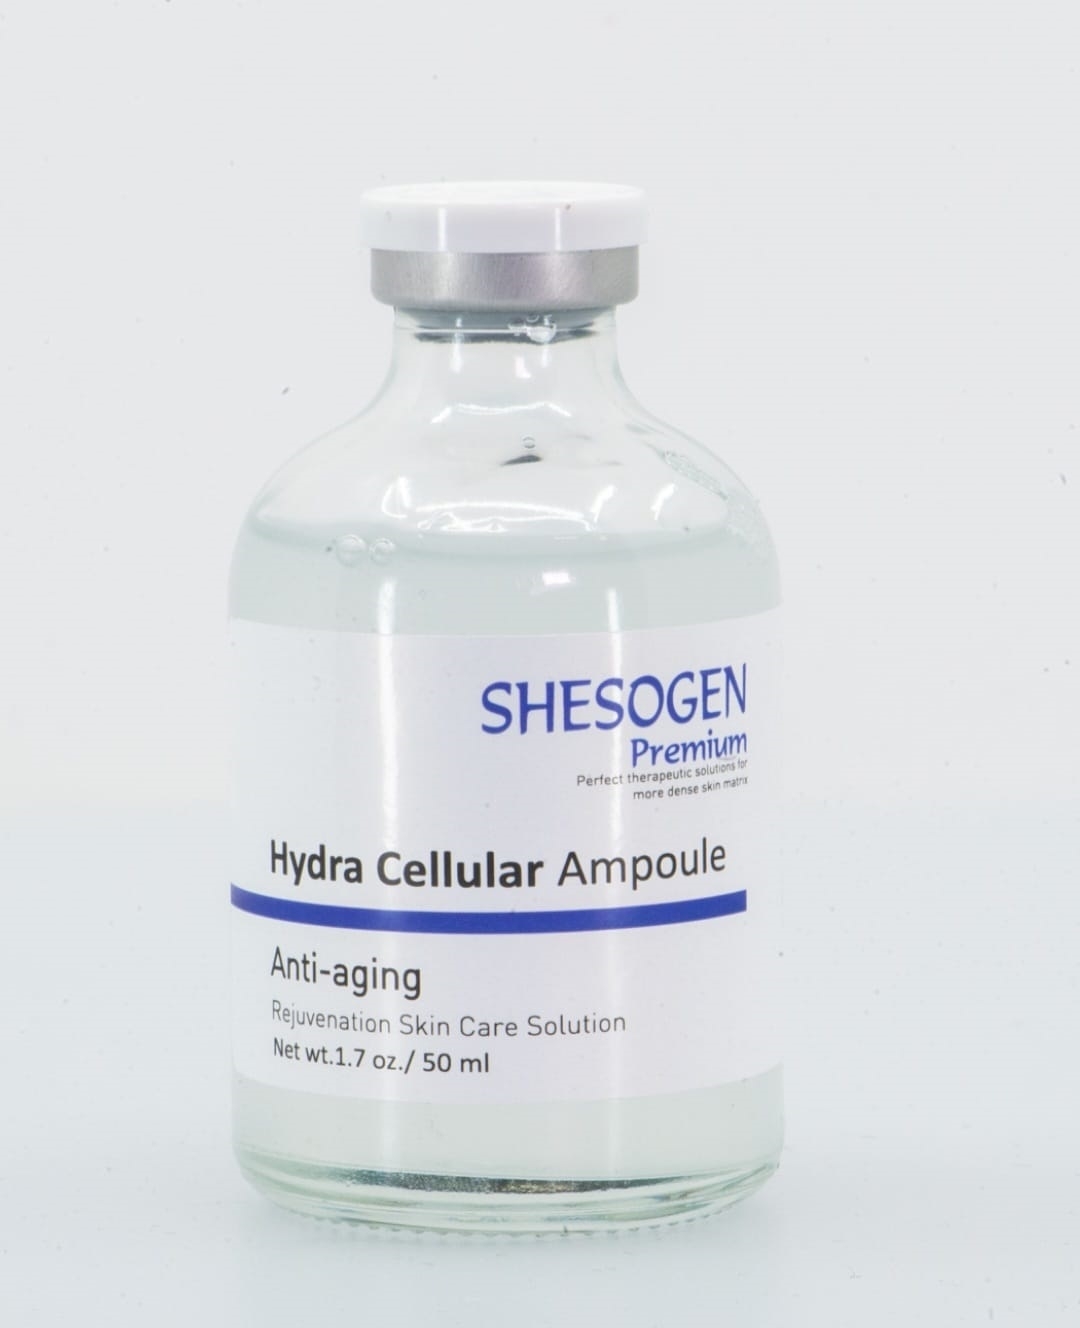 Shesogen Hydra Cellular Ampoule